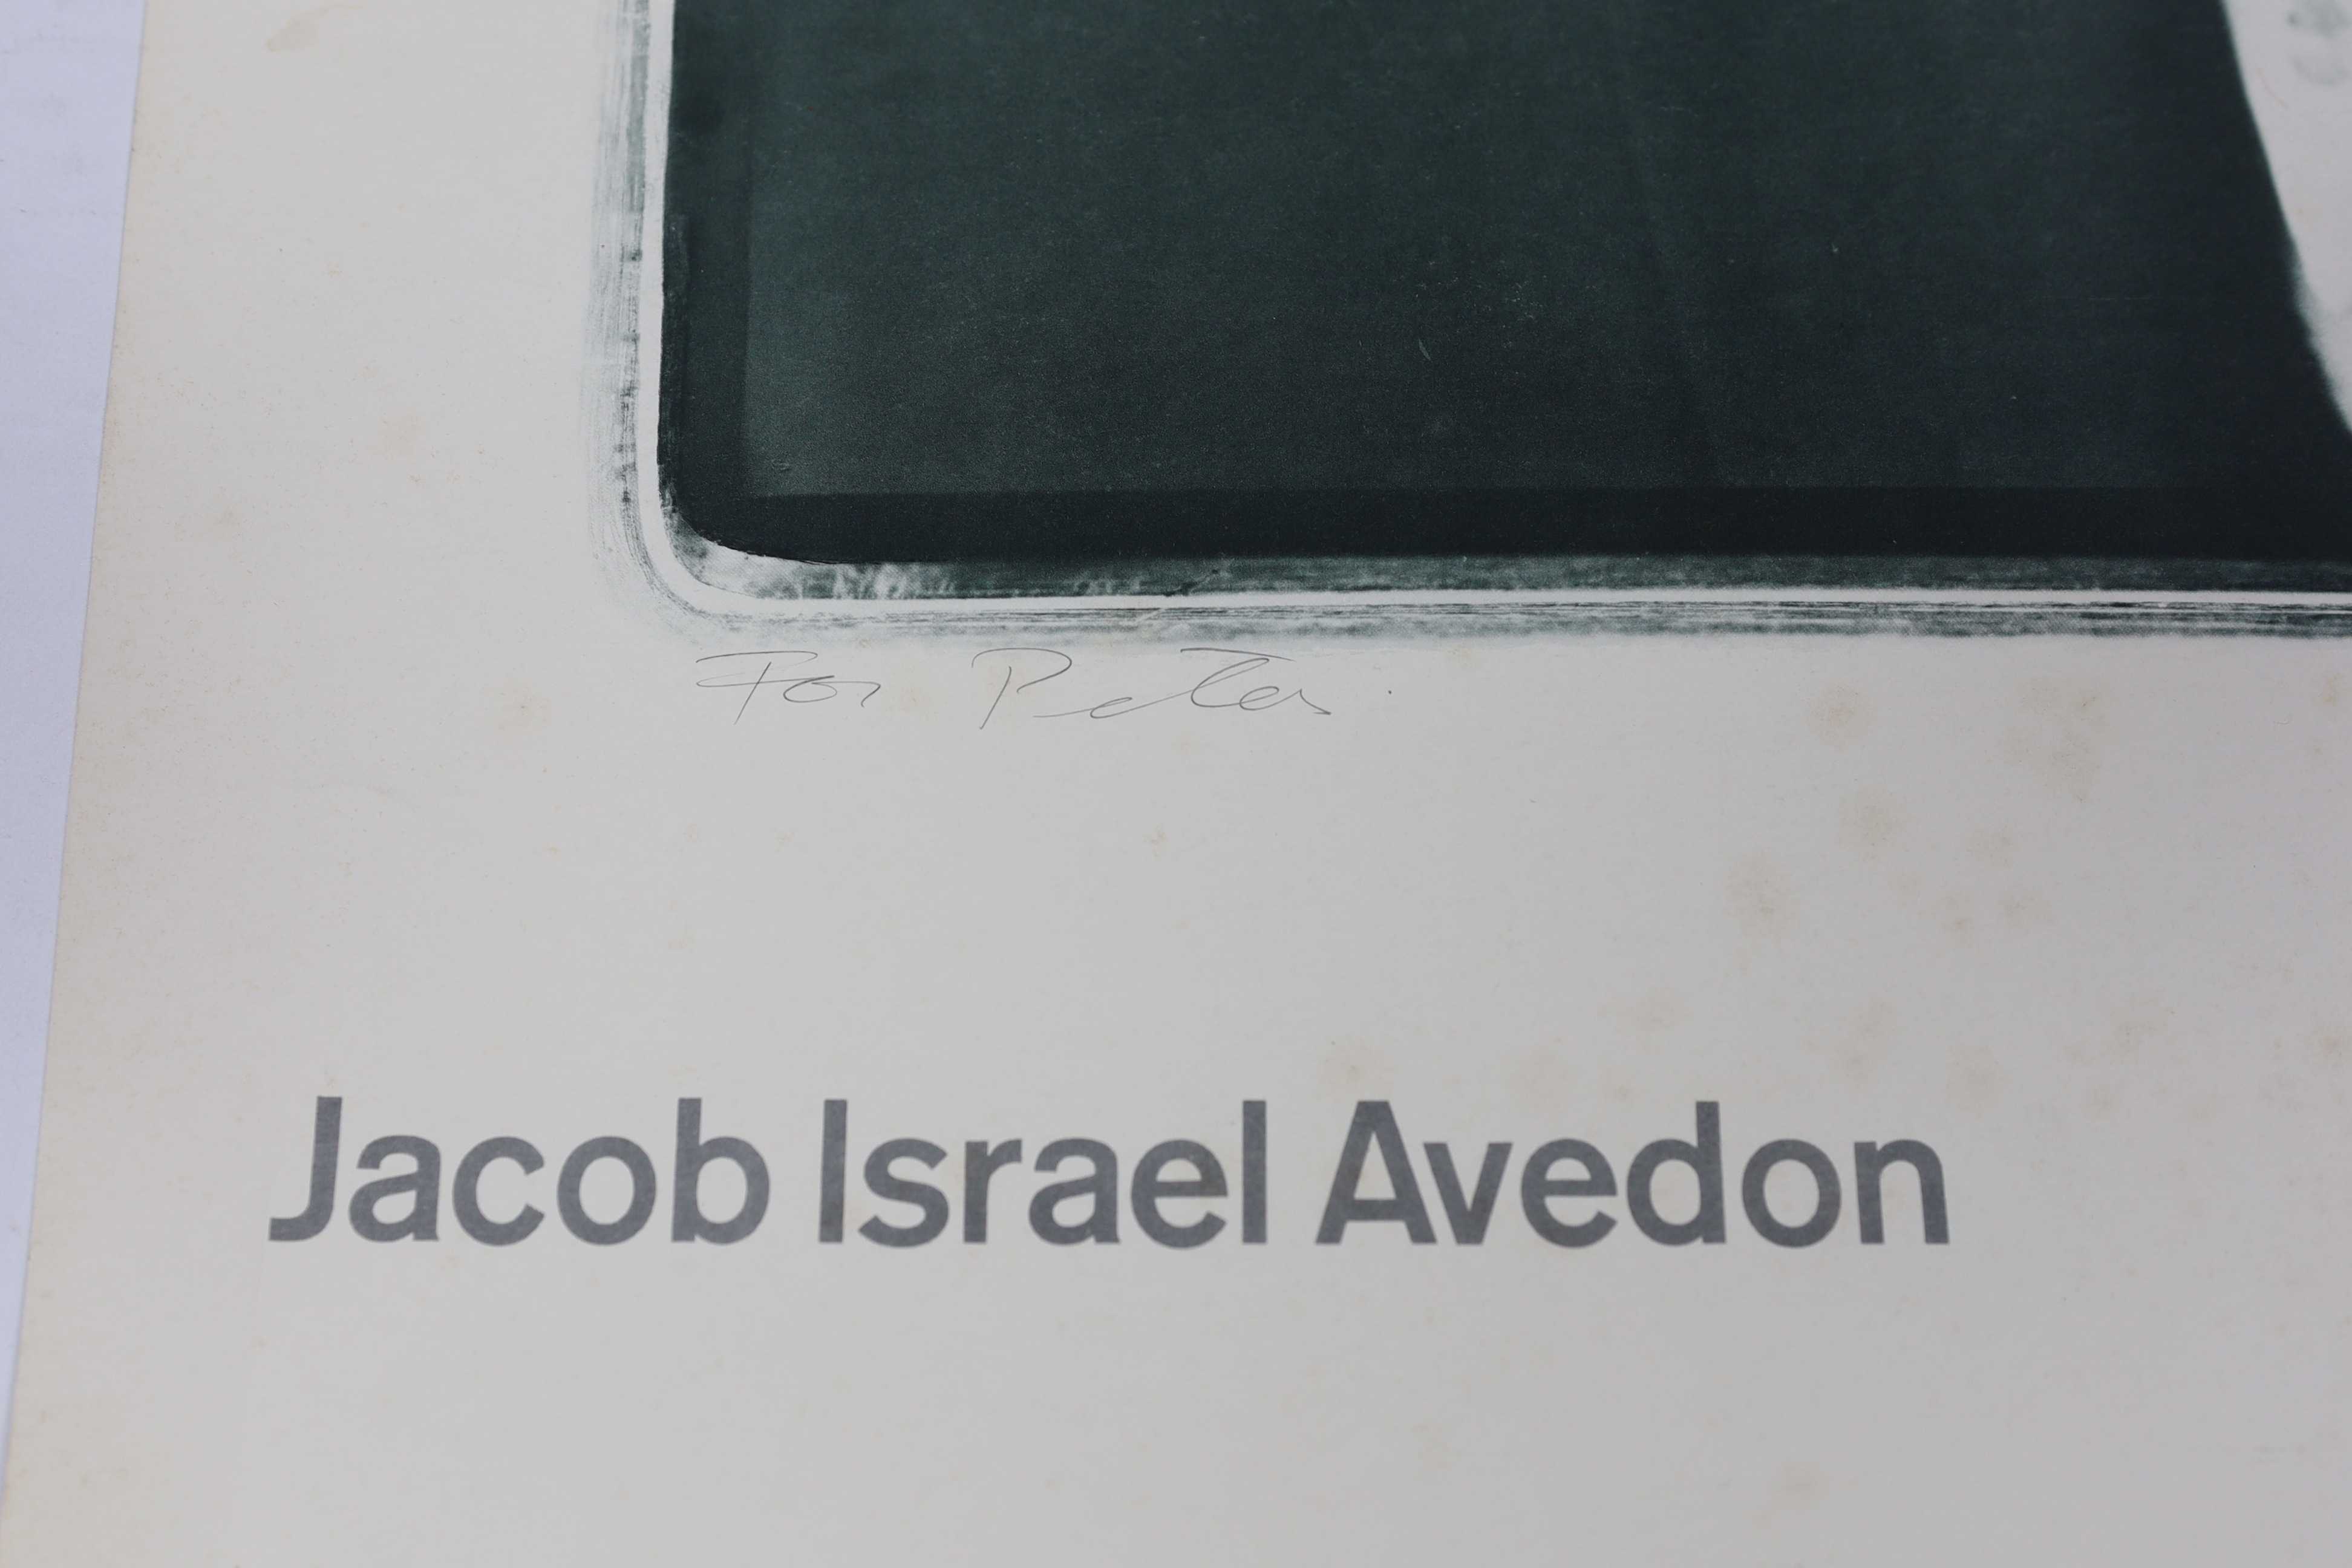 Richard Avedon (American, 1923-2004), 'Jacob Israel Avedon photography by Richard Avedon, Museum of Modern Art, New York 1974', invitation to the Exhibition and an Exhibition poster, poster 64 x 57cm, invitation 18 x 18c